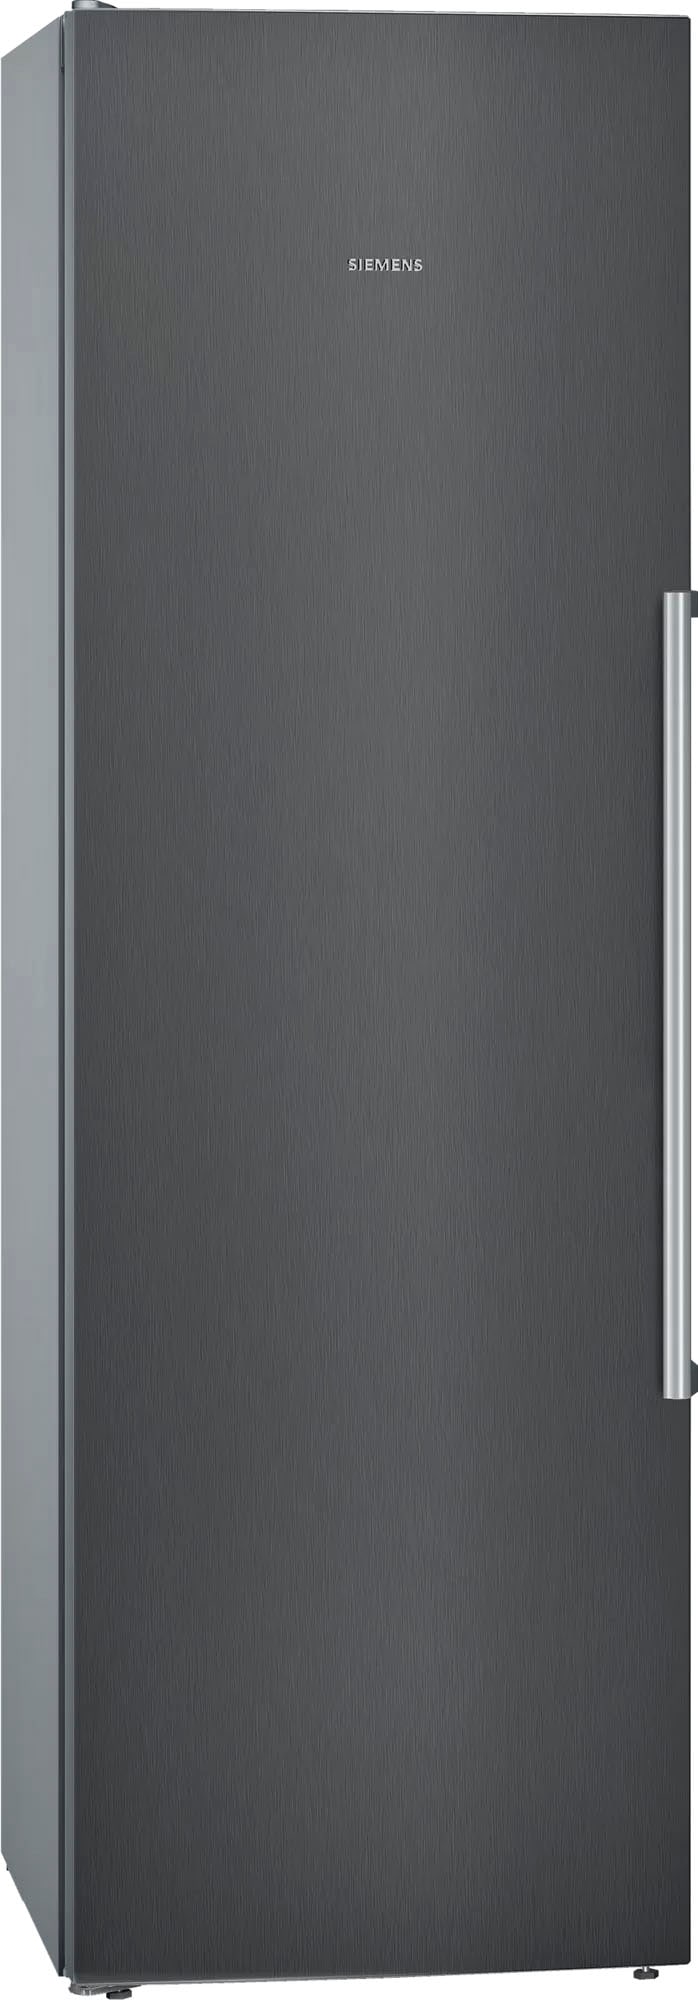 SIEMENS Kühlschrank "KS36VAXEP", KS36VAXEP, 186 cm hoch, 60 cm breit